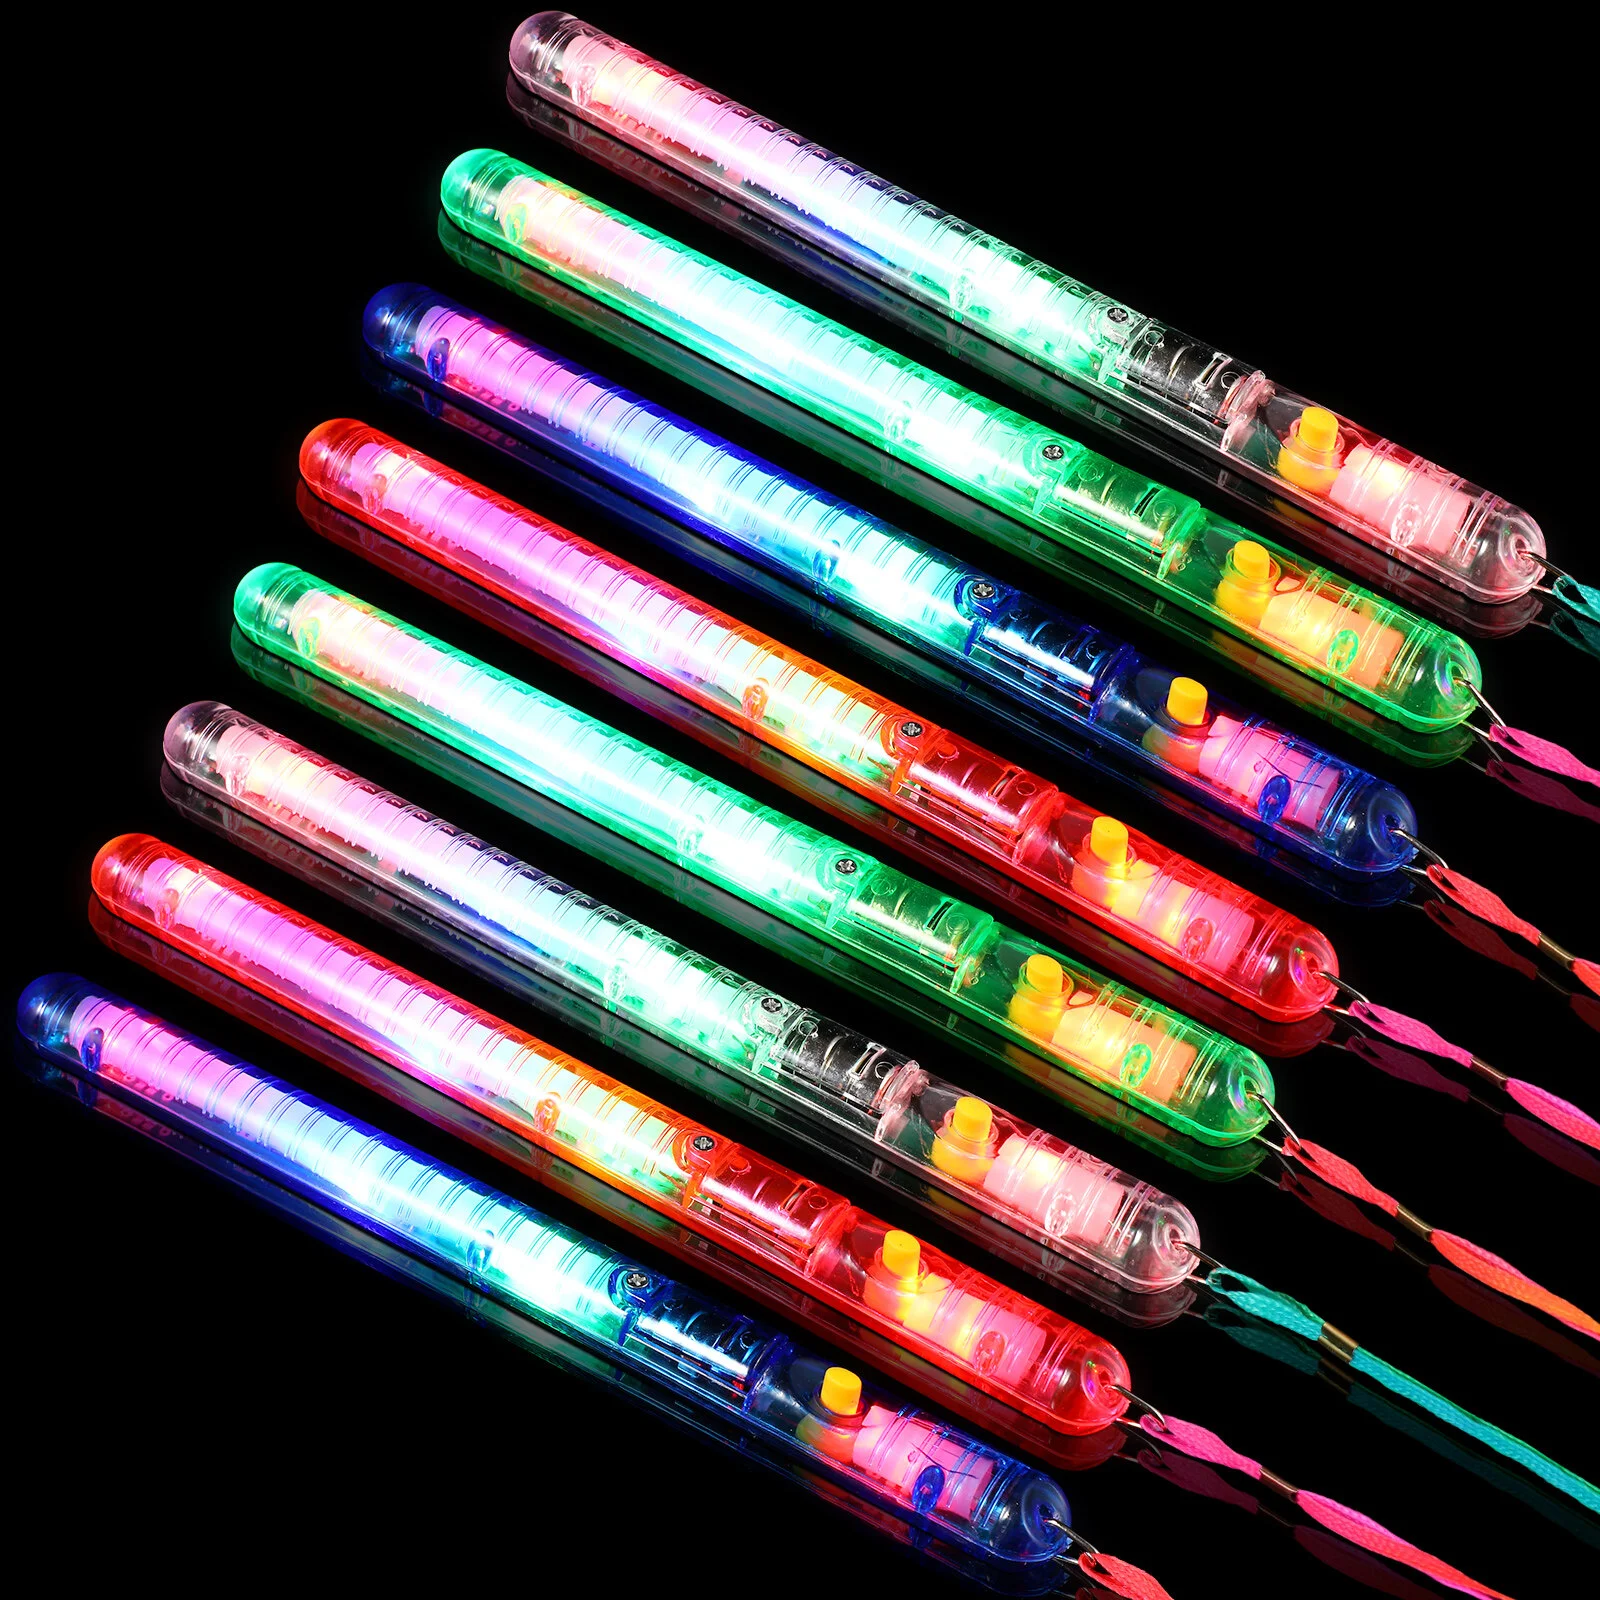 

12 Pcs Glow Sticks For Parties Party Supplies Glowing Wand Wands Kids Light Stick Fluorescent Sticks Parties LED Child Wedding